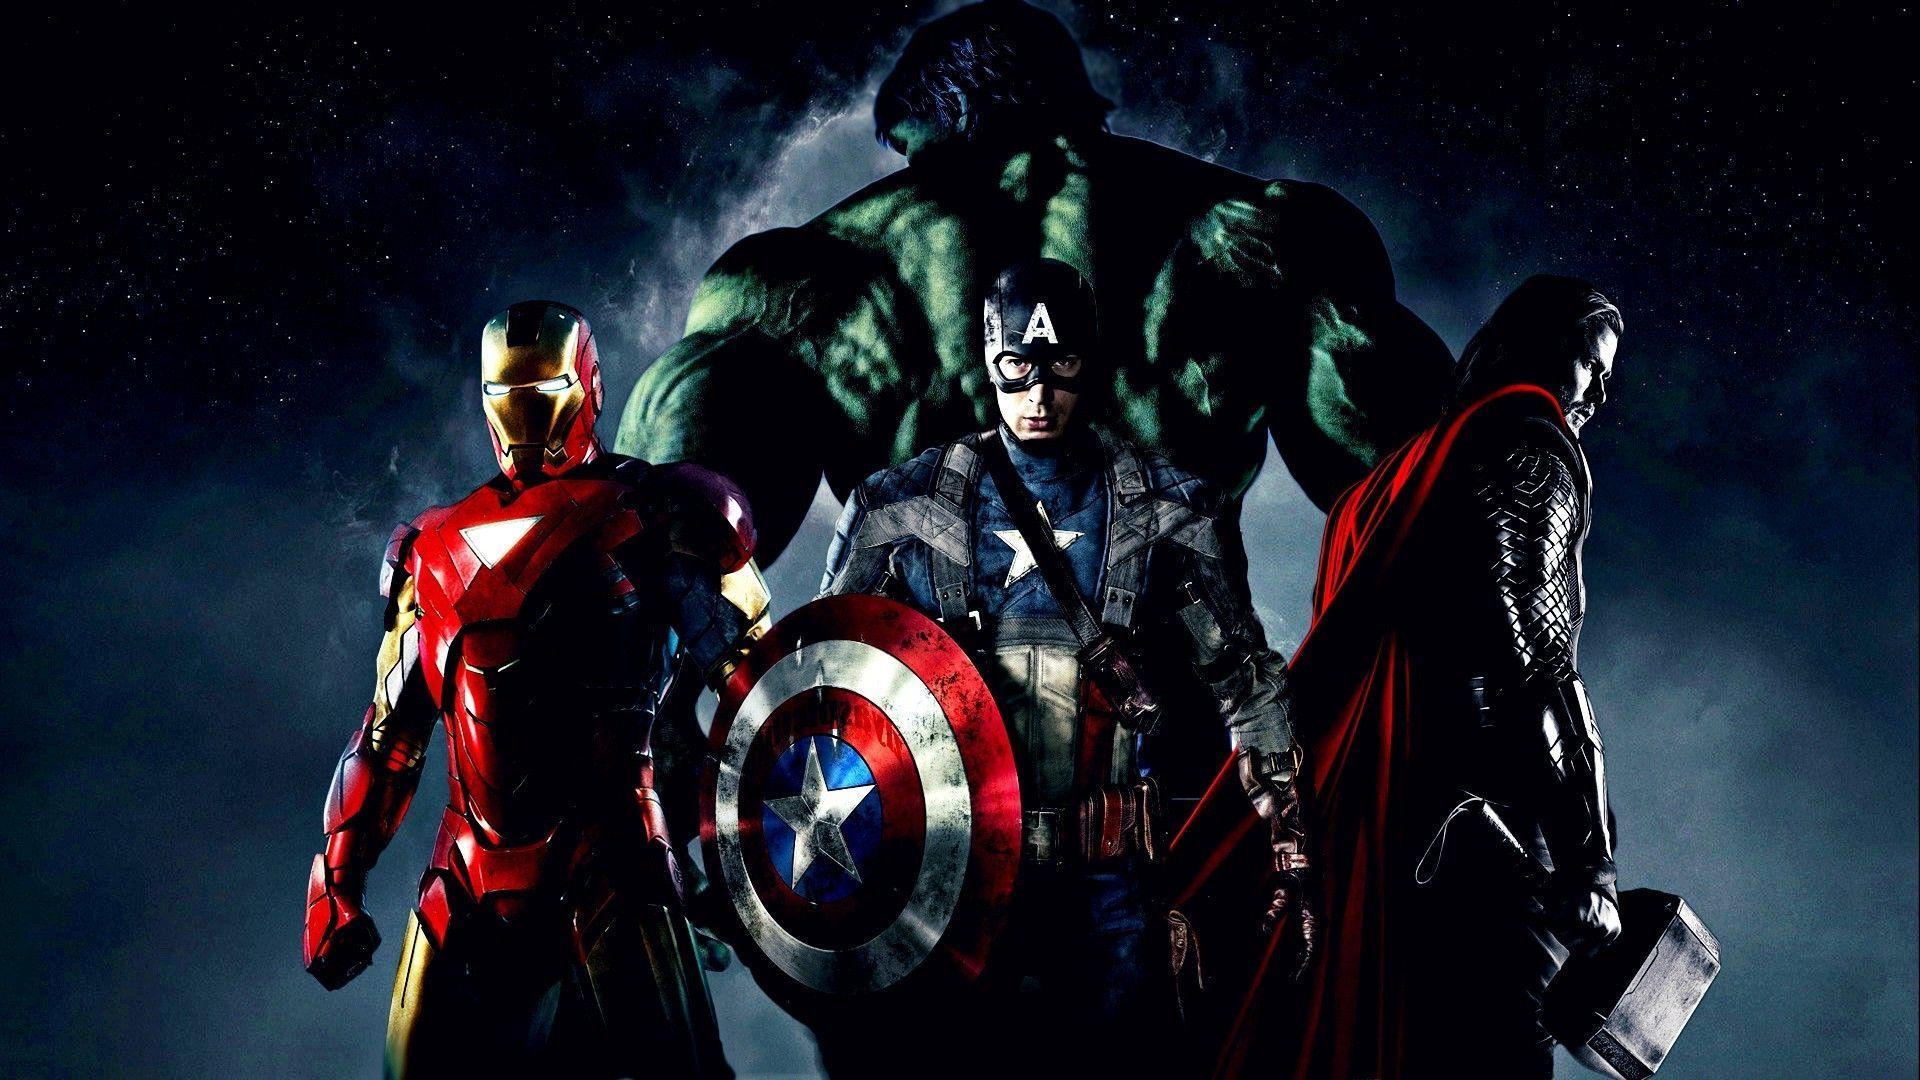 Iron Man Avengers Wallpaper Group. Iron man avengers, Iron man vs captain america